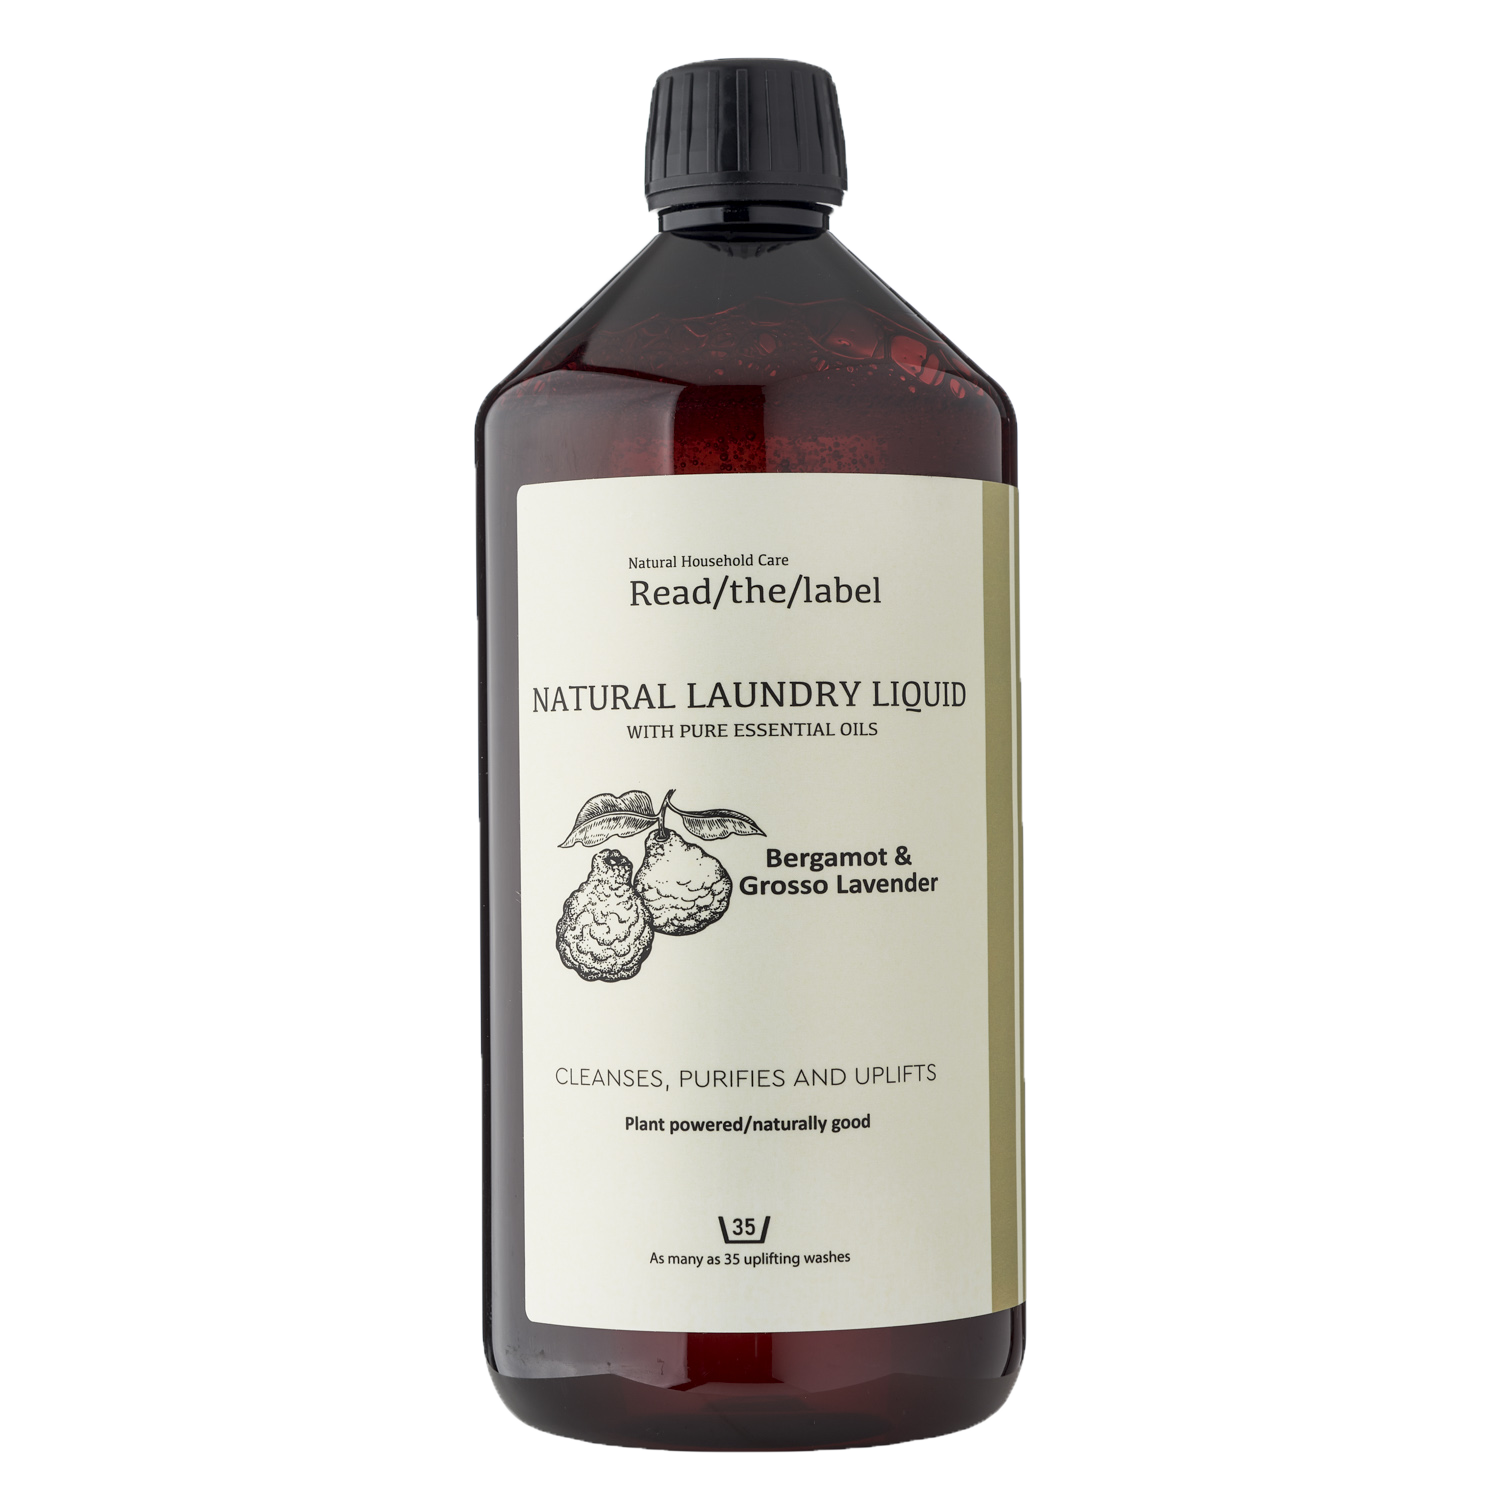 Natural laundry liquid